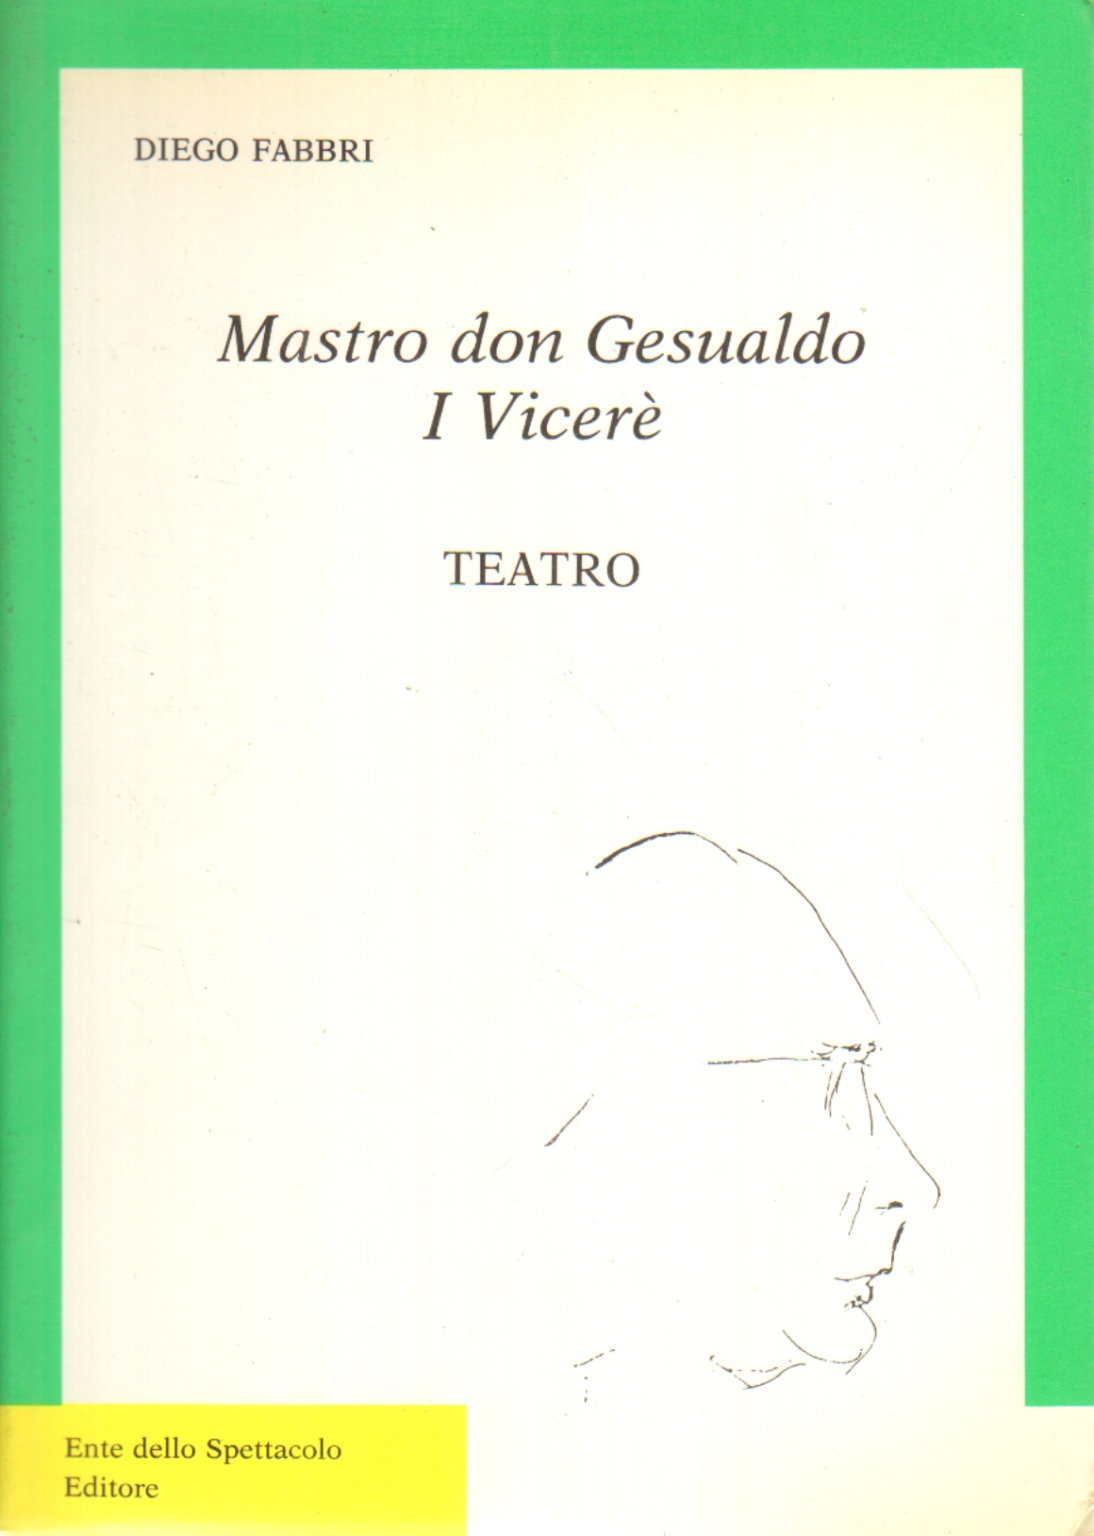 Mastro don Gesualdo. The Viceroy, Diego Fabbri